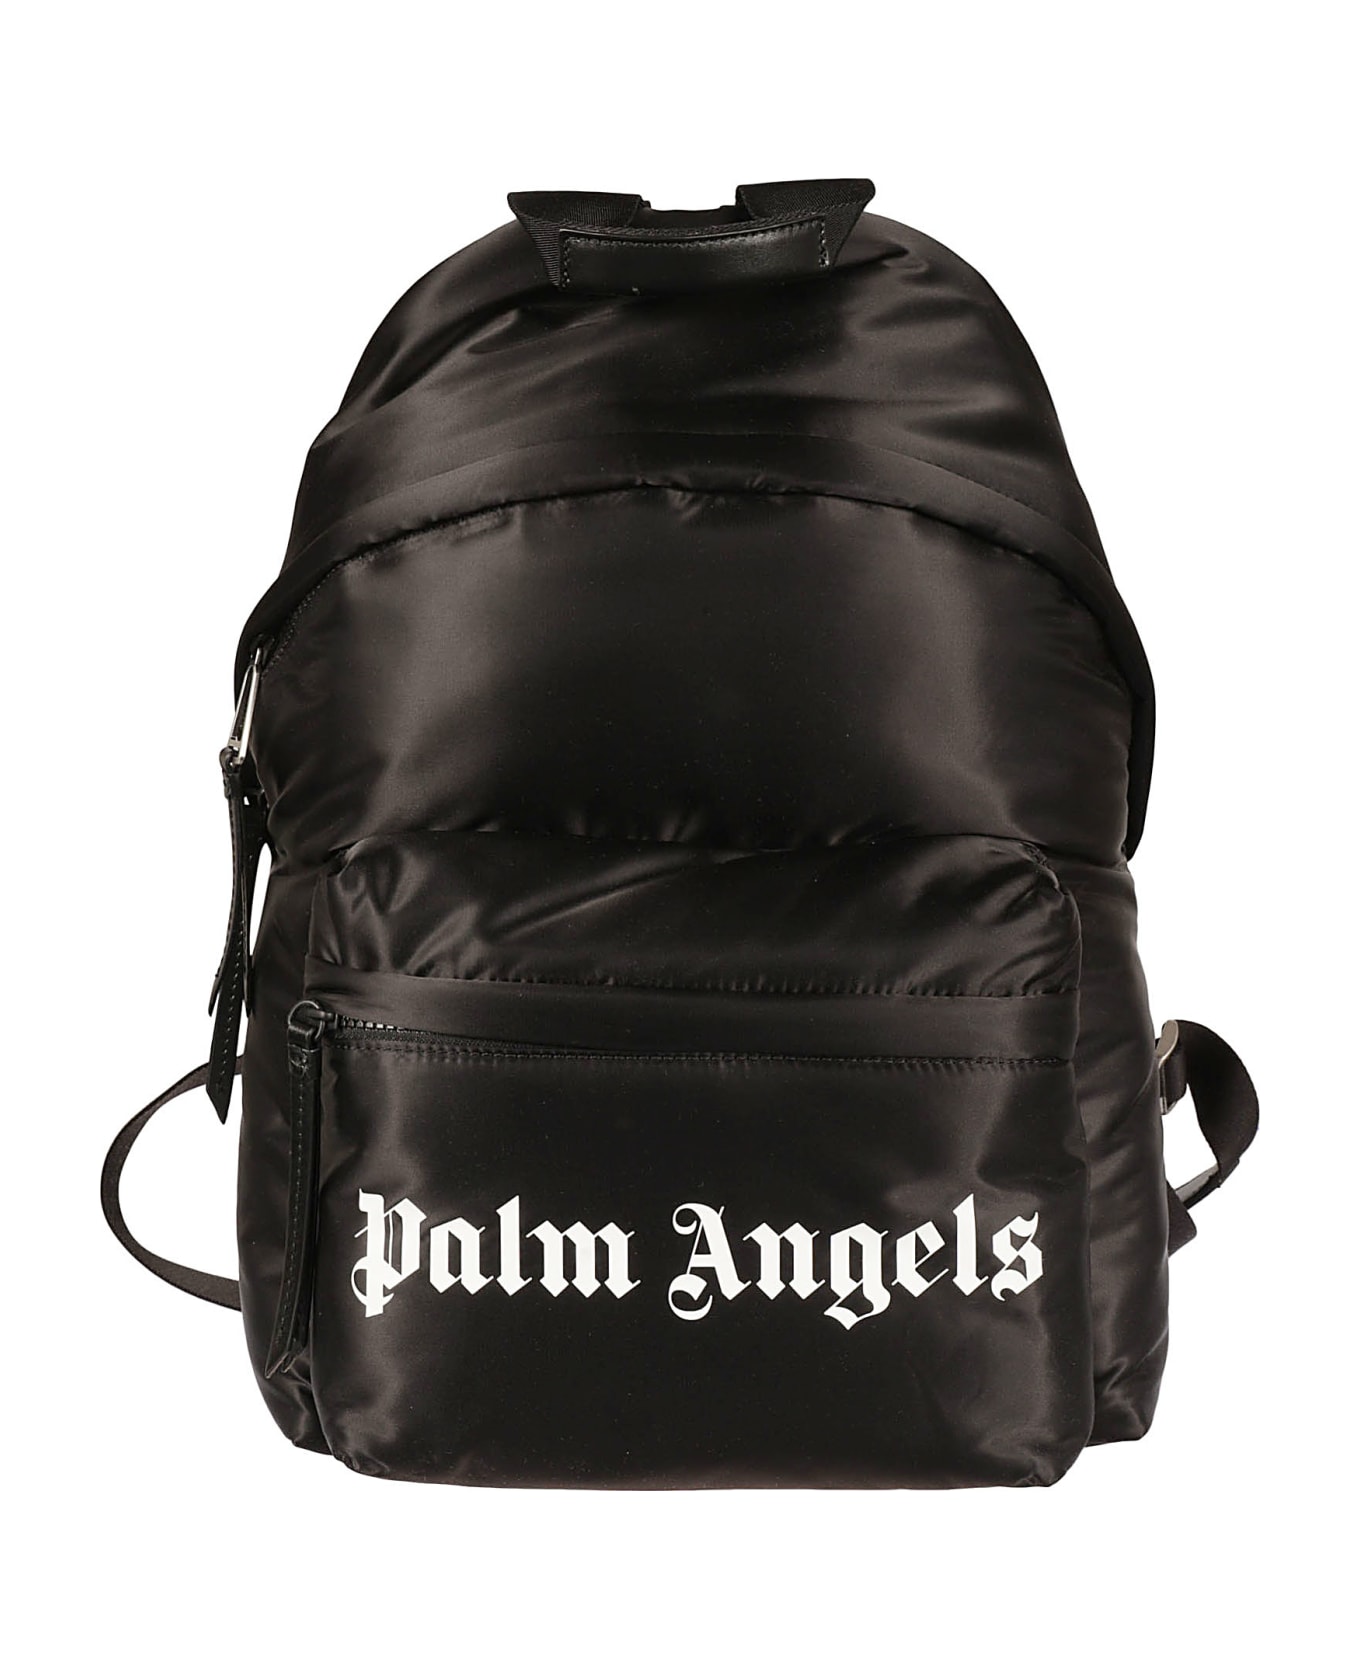 Palm Angels Logo Print Nylon Backpack - Nero/bianco バックパック